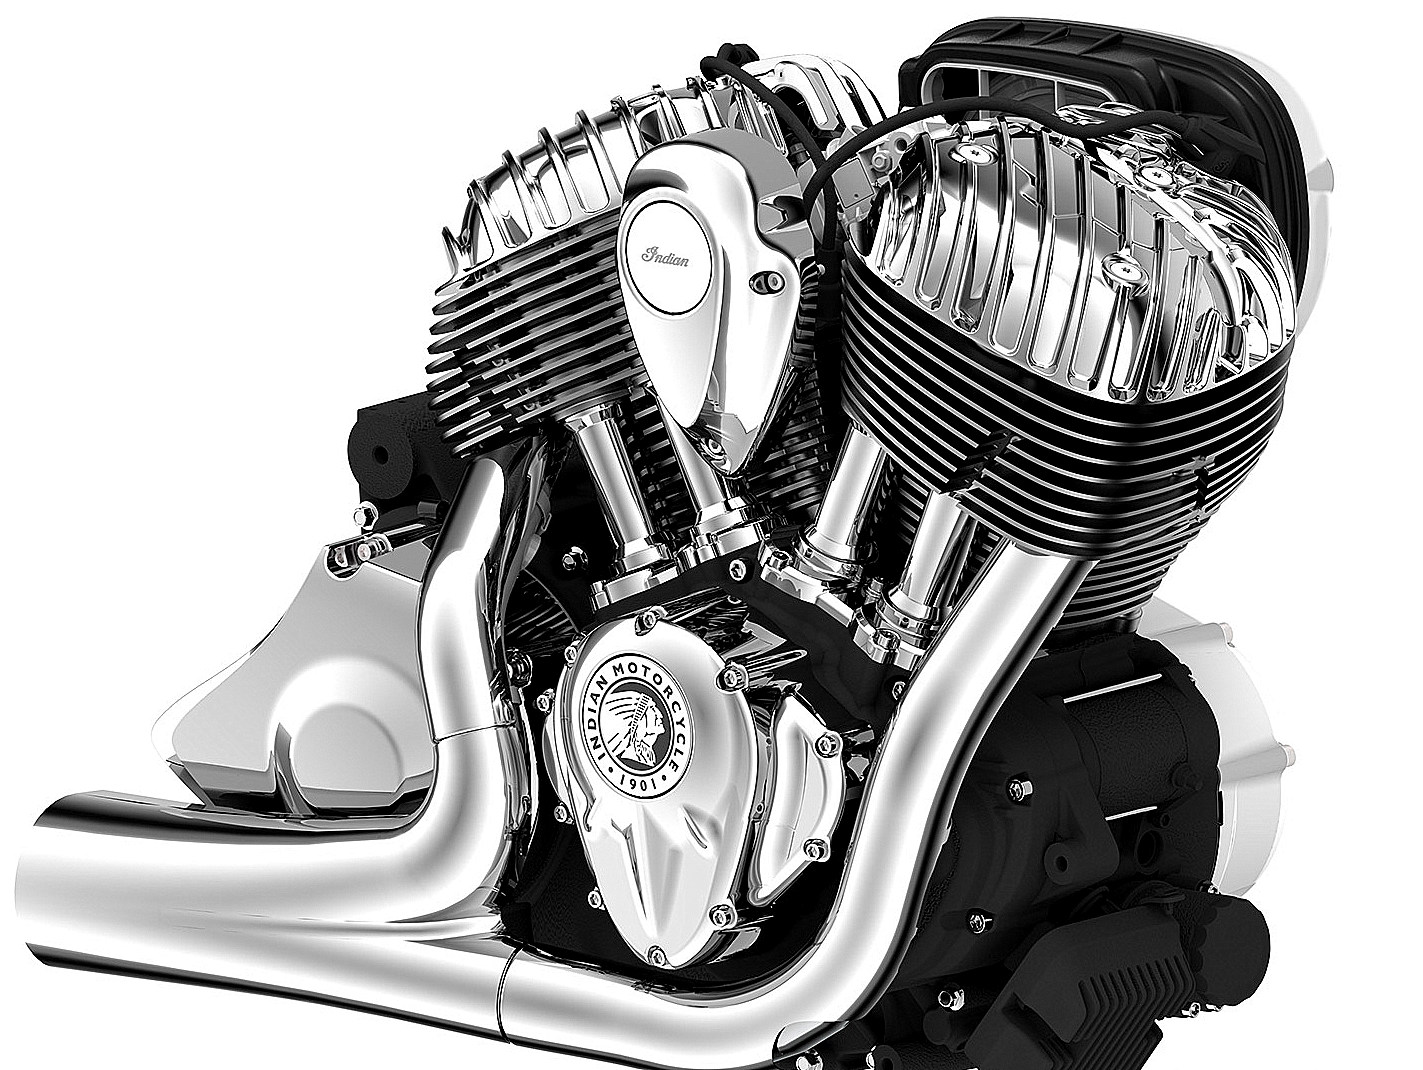 Мотор байка. Harley Davidson v Twin. Двигатель мотоцикла Харлей Дэвидсон. Харлей Дэвидсон с двигателем v8. Ct70 v-Twin.